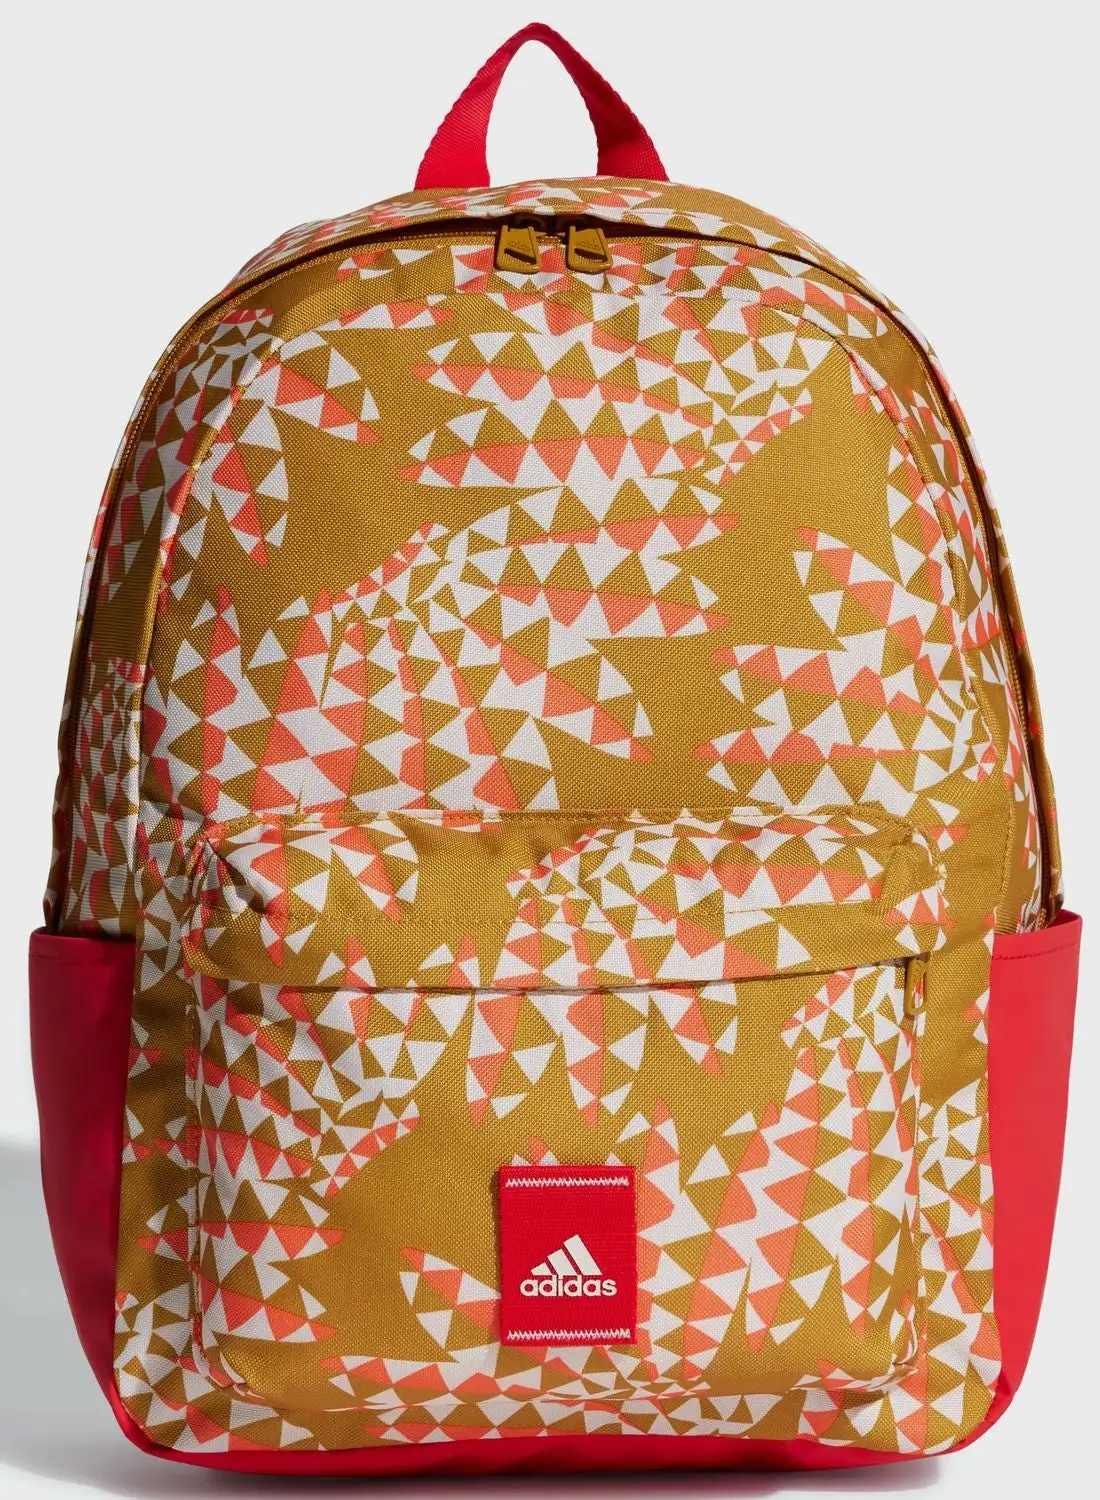 Adidas Classic Farm Backpack